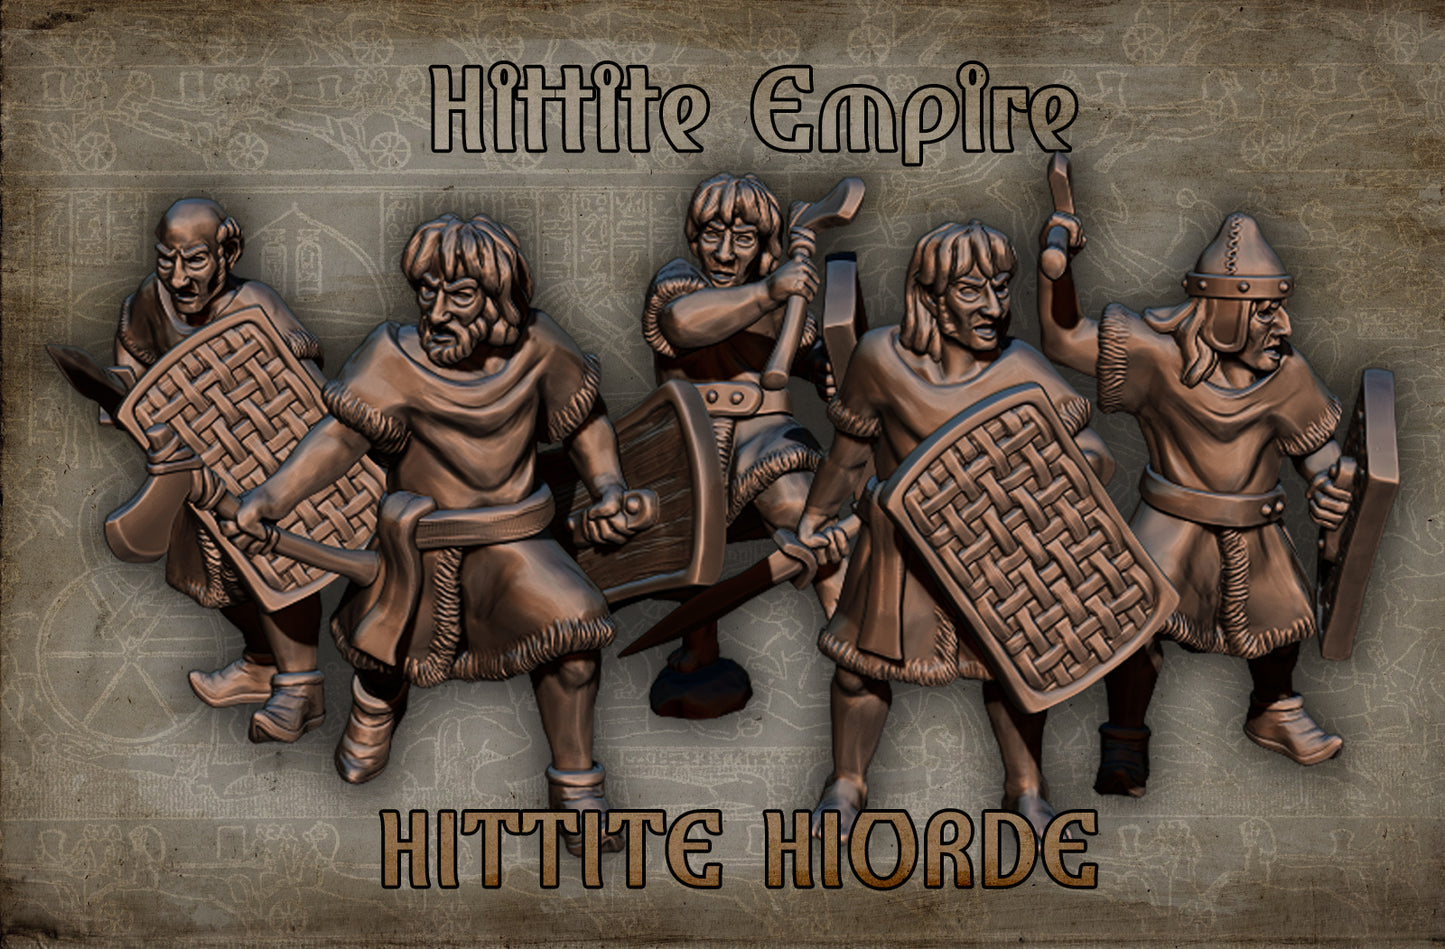 Hittite Hordes